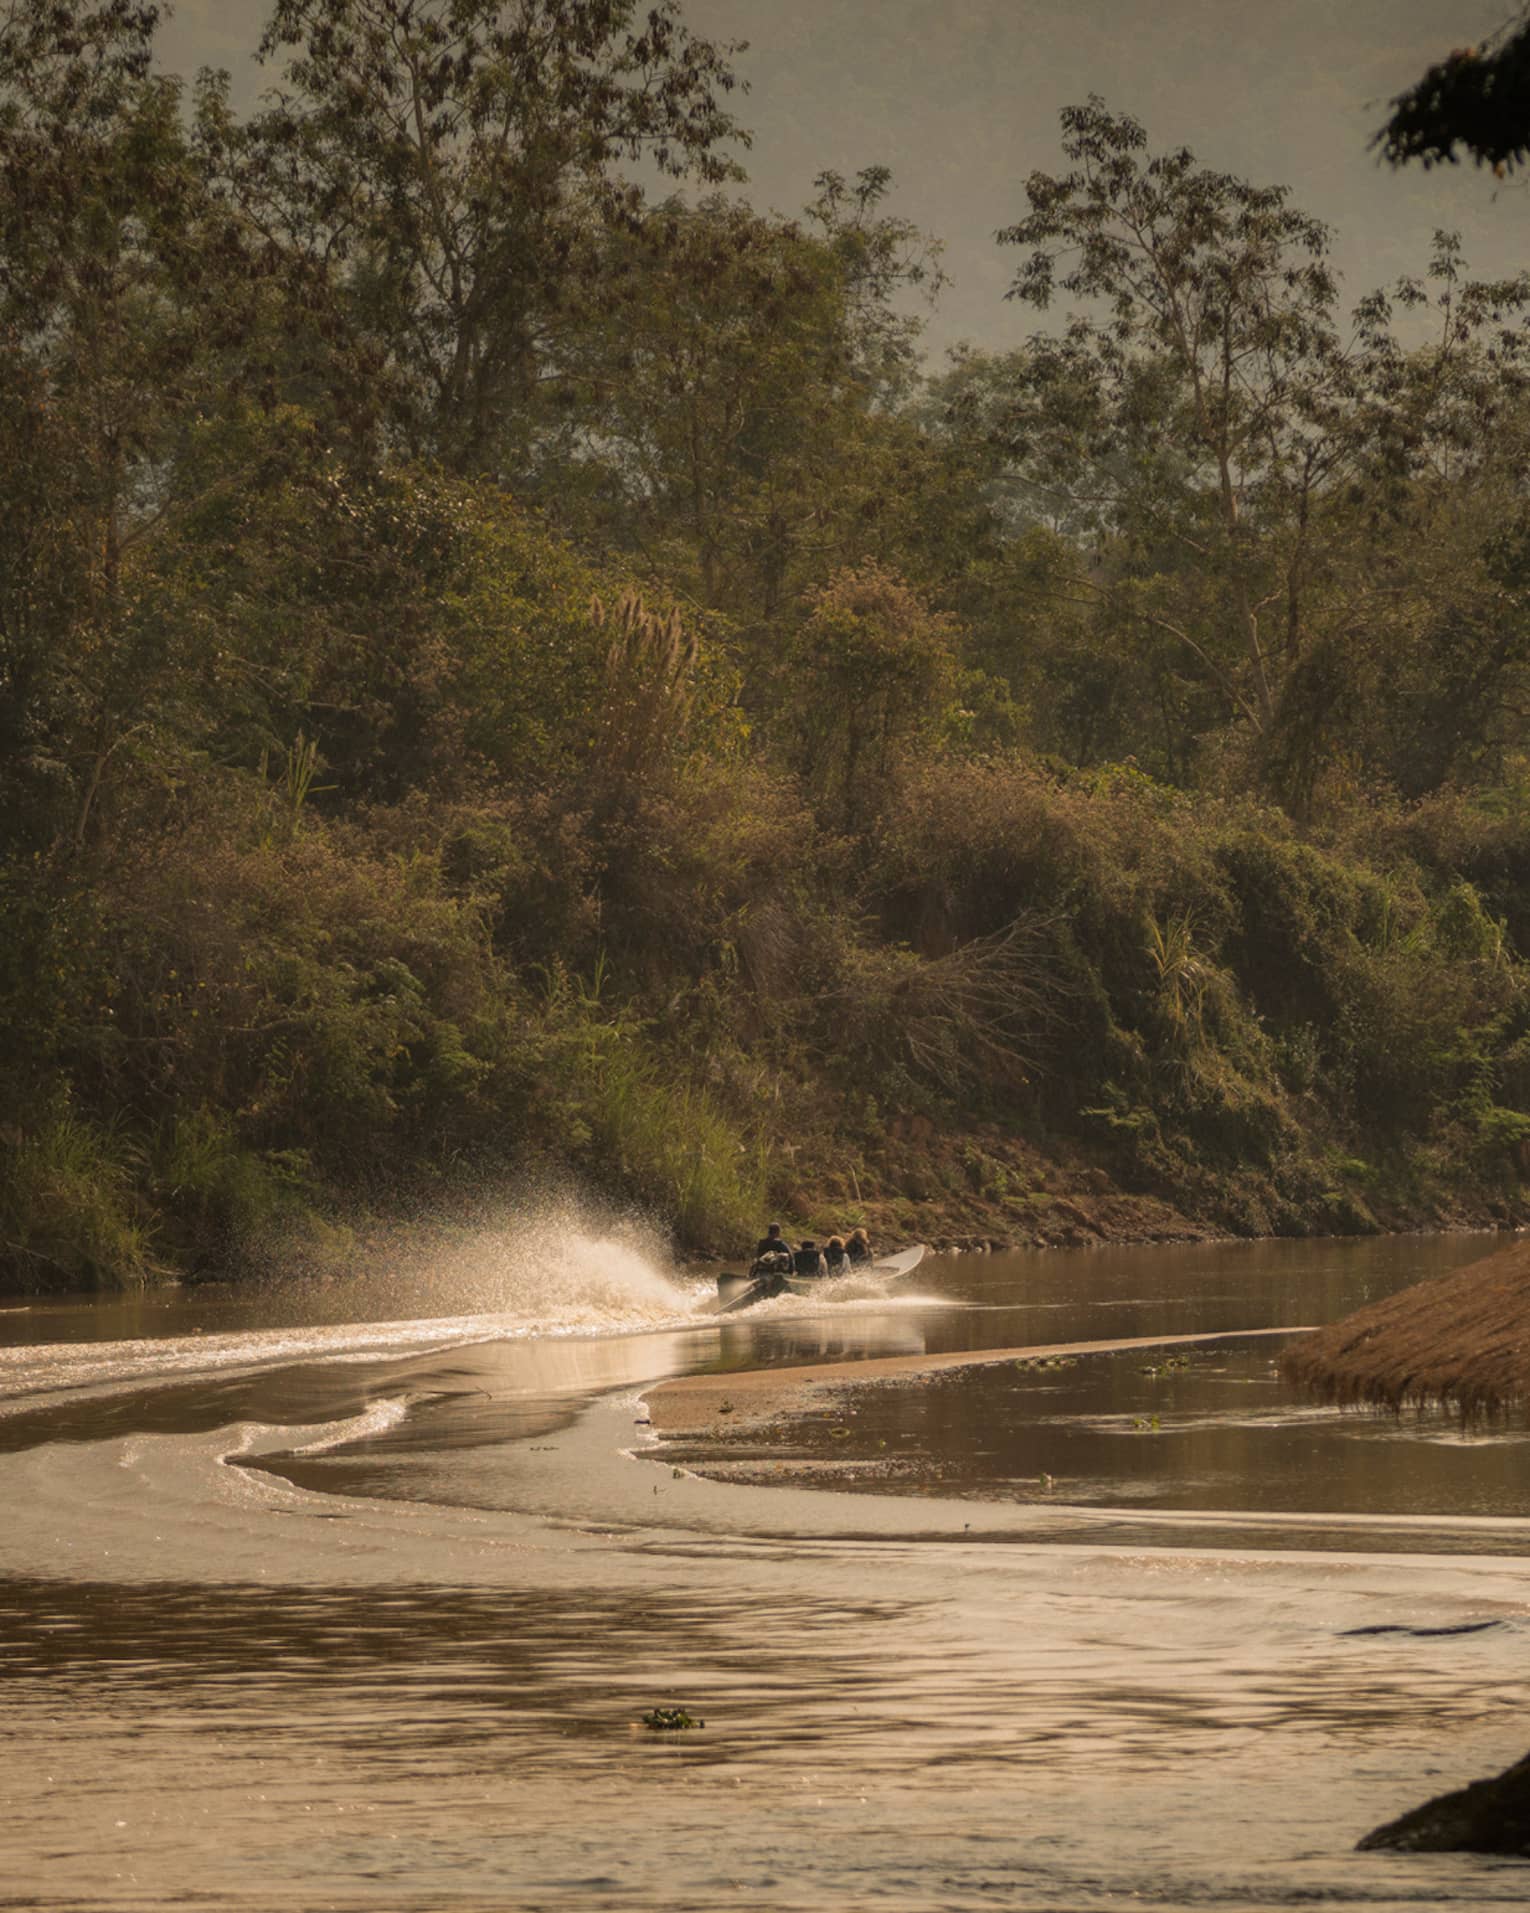 Longtail boat sprays water as it zips down the Ruak river